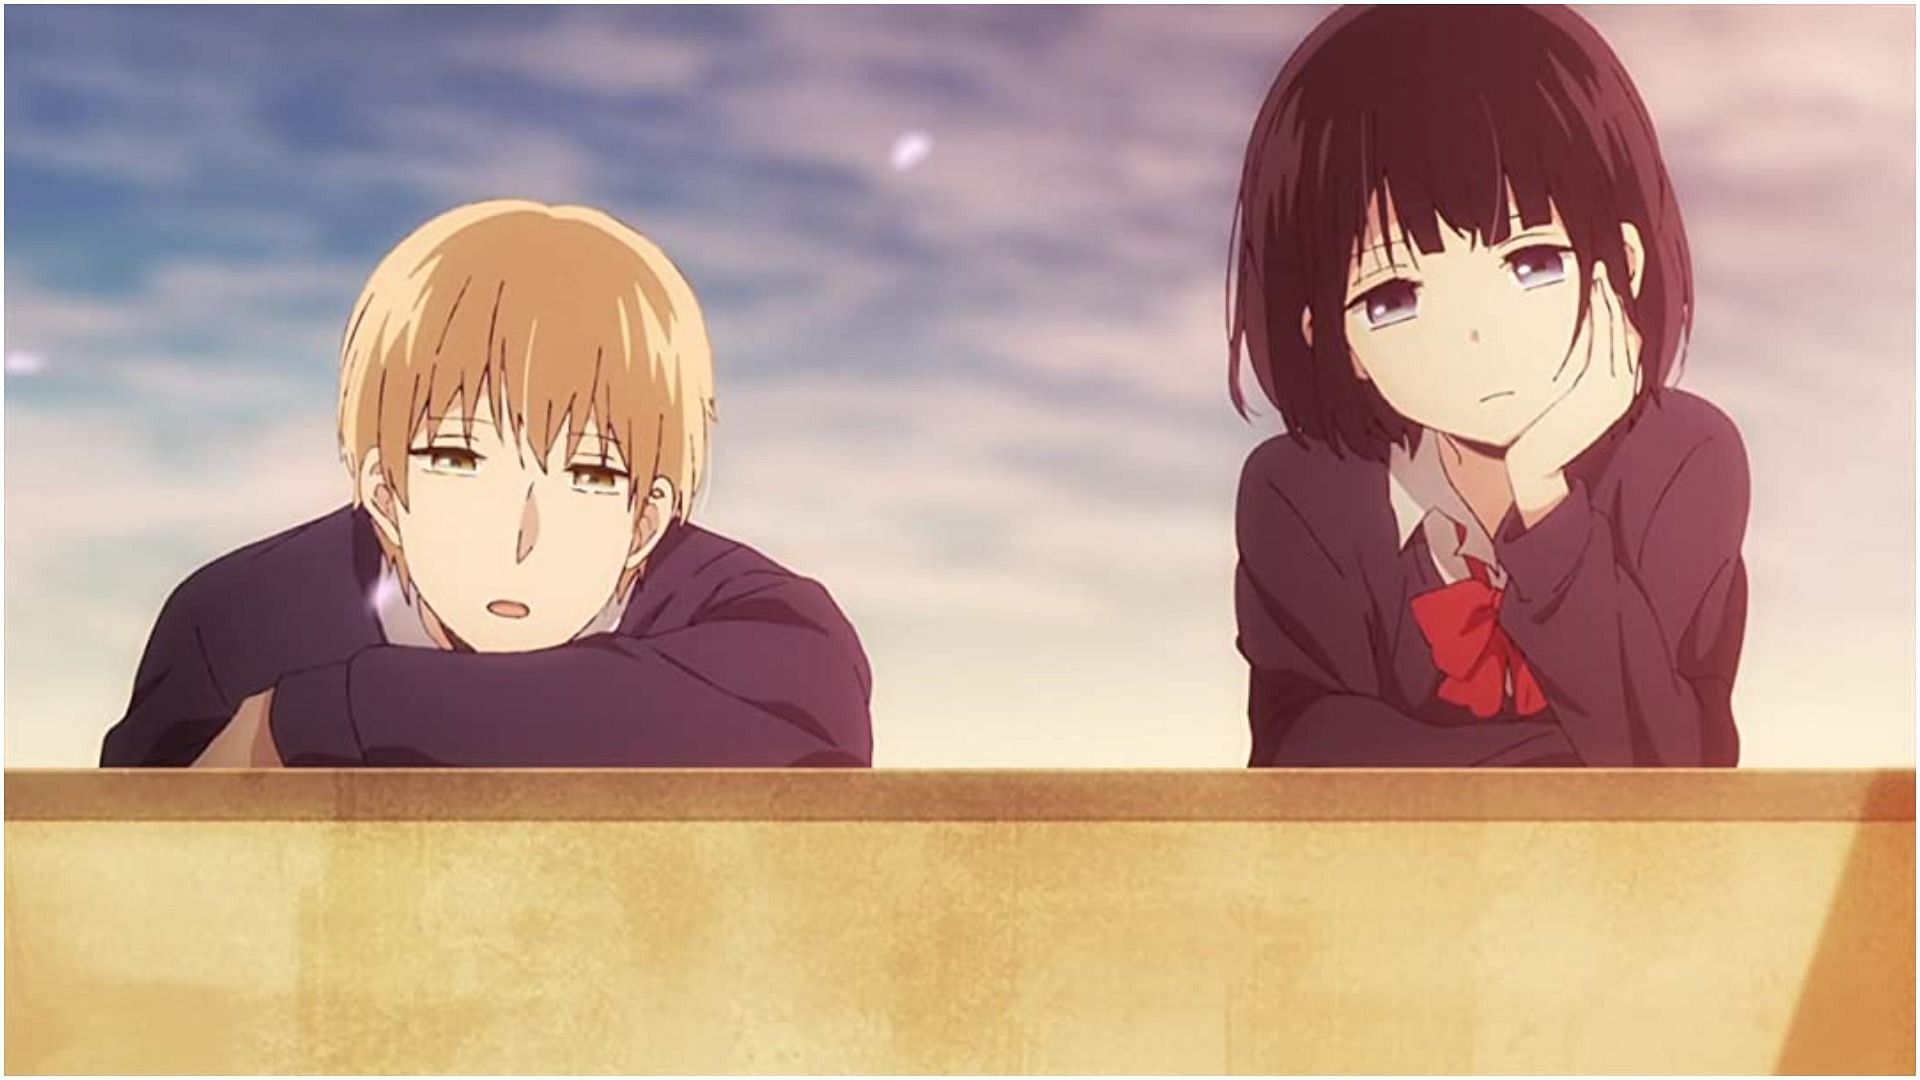 Mugi Awaya and Hanabi Yasuraoka, as seen in the anime (Image via Lerche)